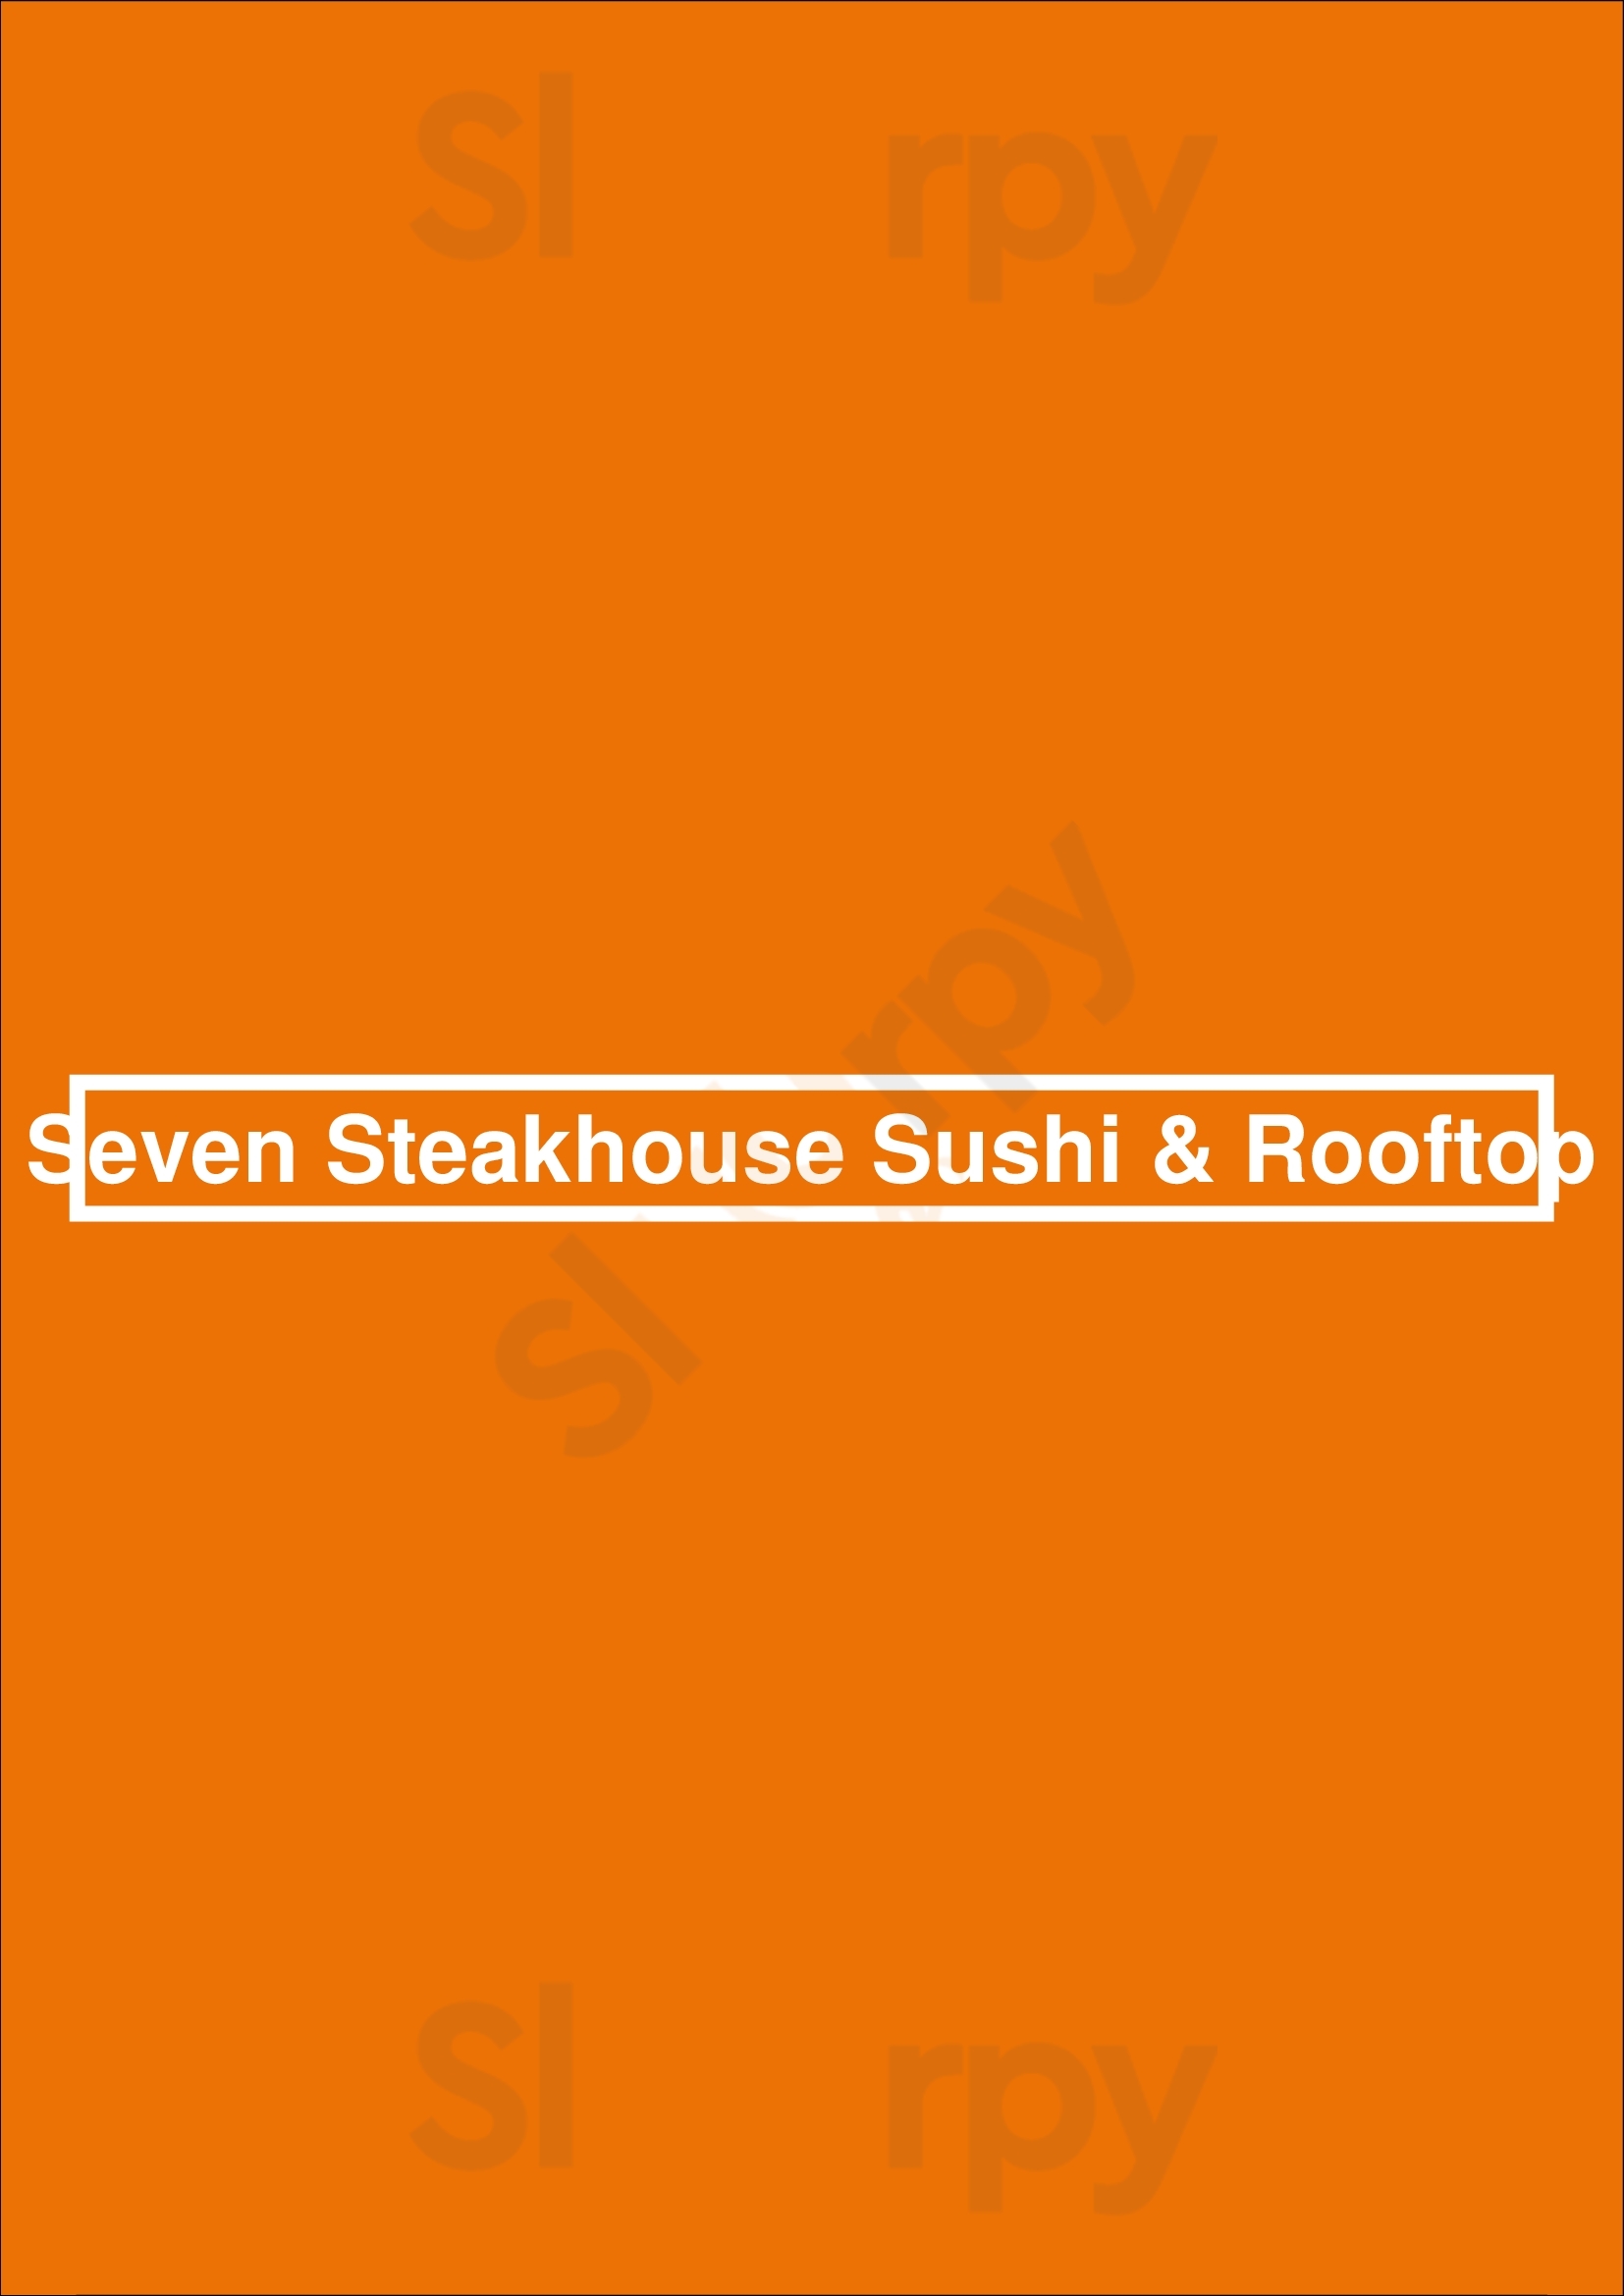 Seven Steakhouse Sushi & Rooftop Minneapolis Menu - 1